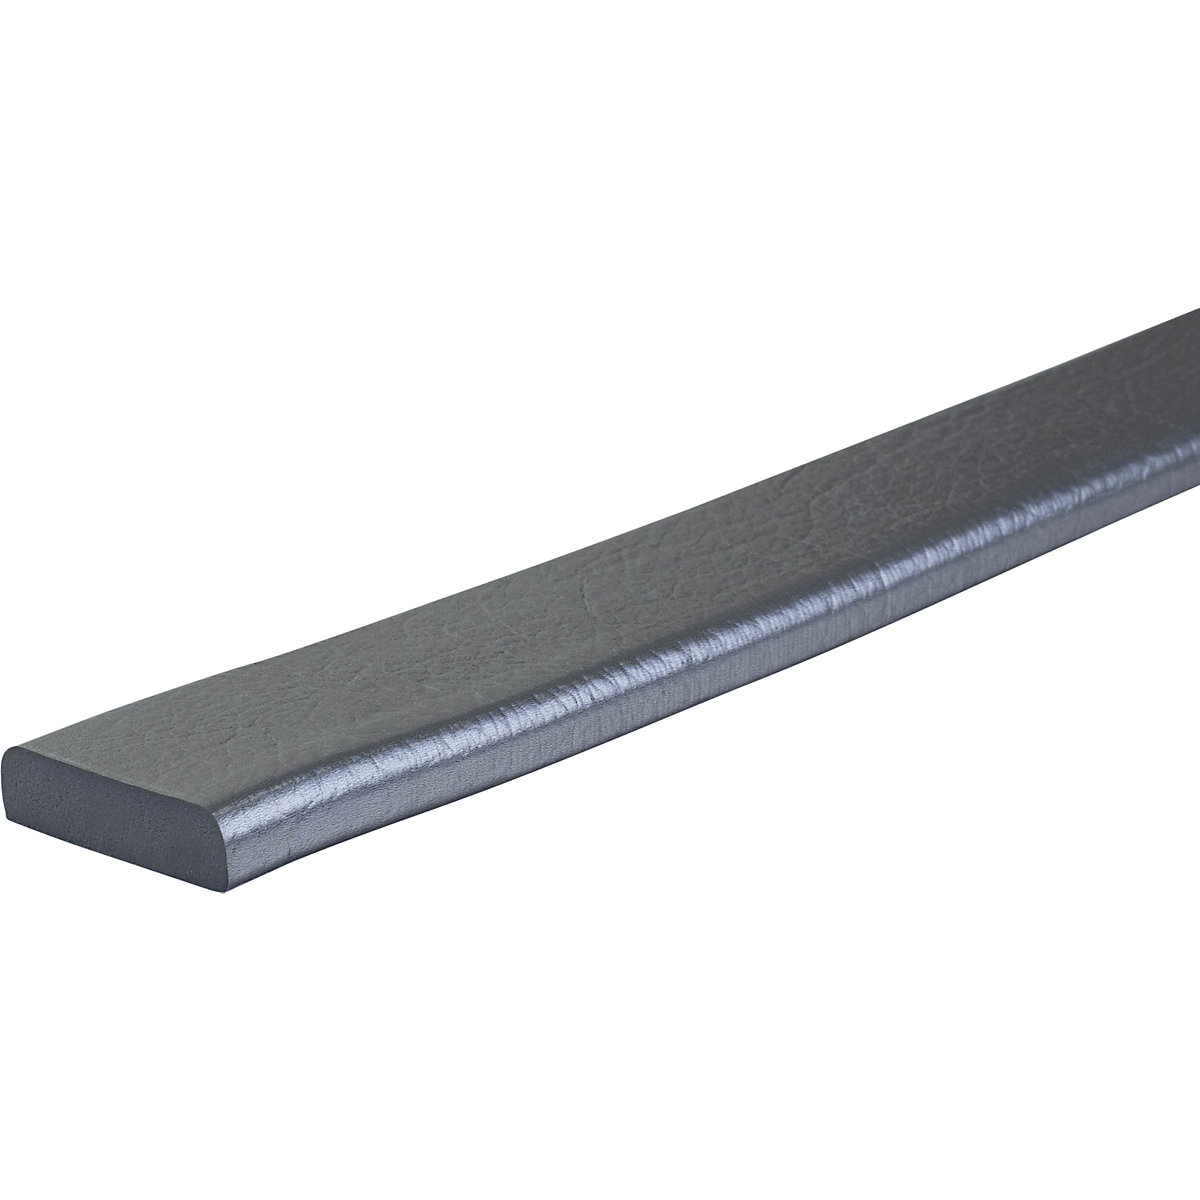 Knuffi®-oppervlaktebescherming – SHG, type F, stuk van 1 m, zilverkleurig-33